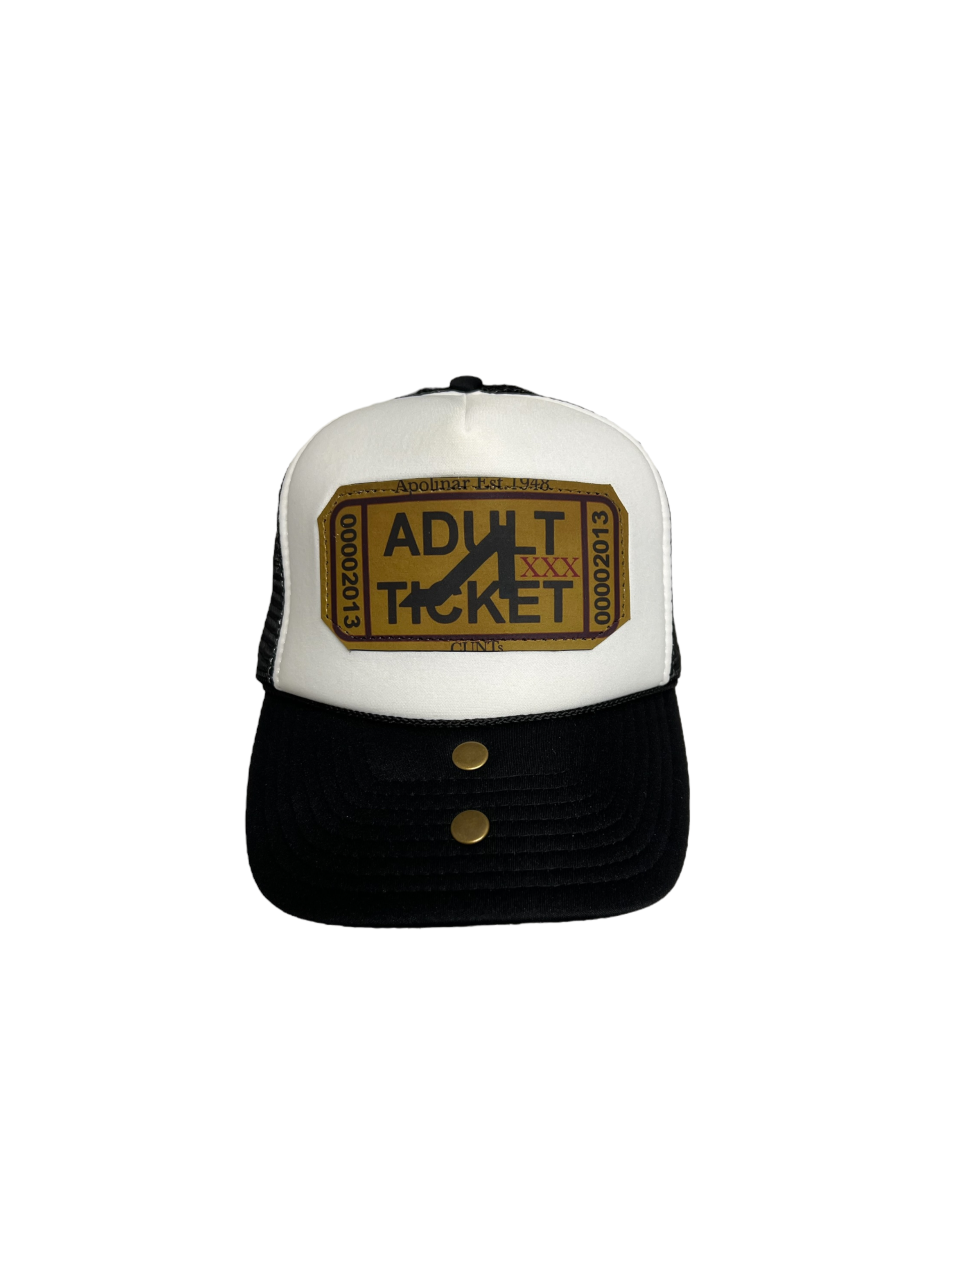 ADULT TICKET Trucker Hat